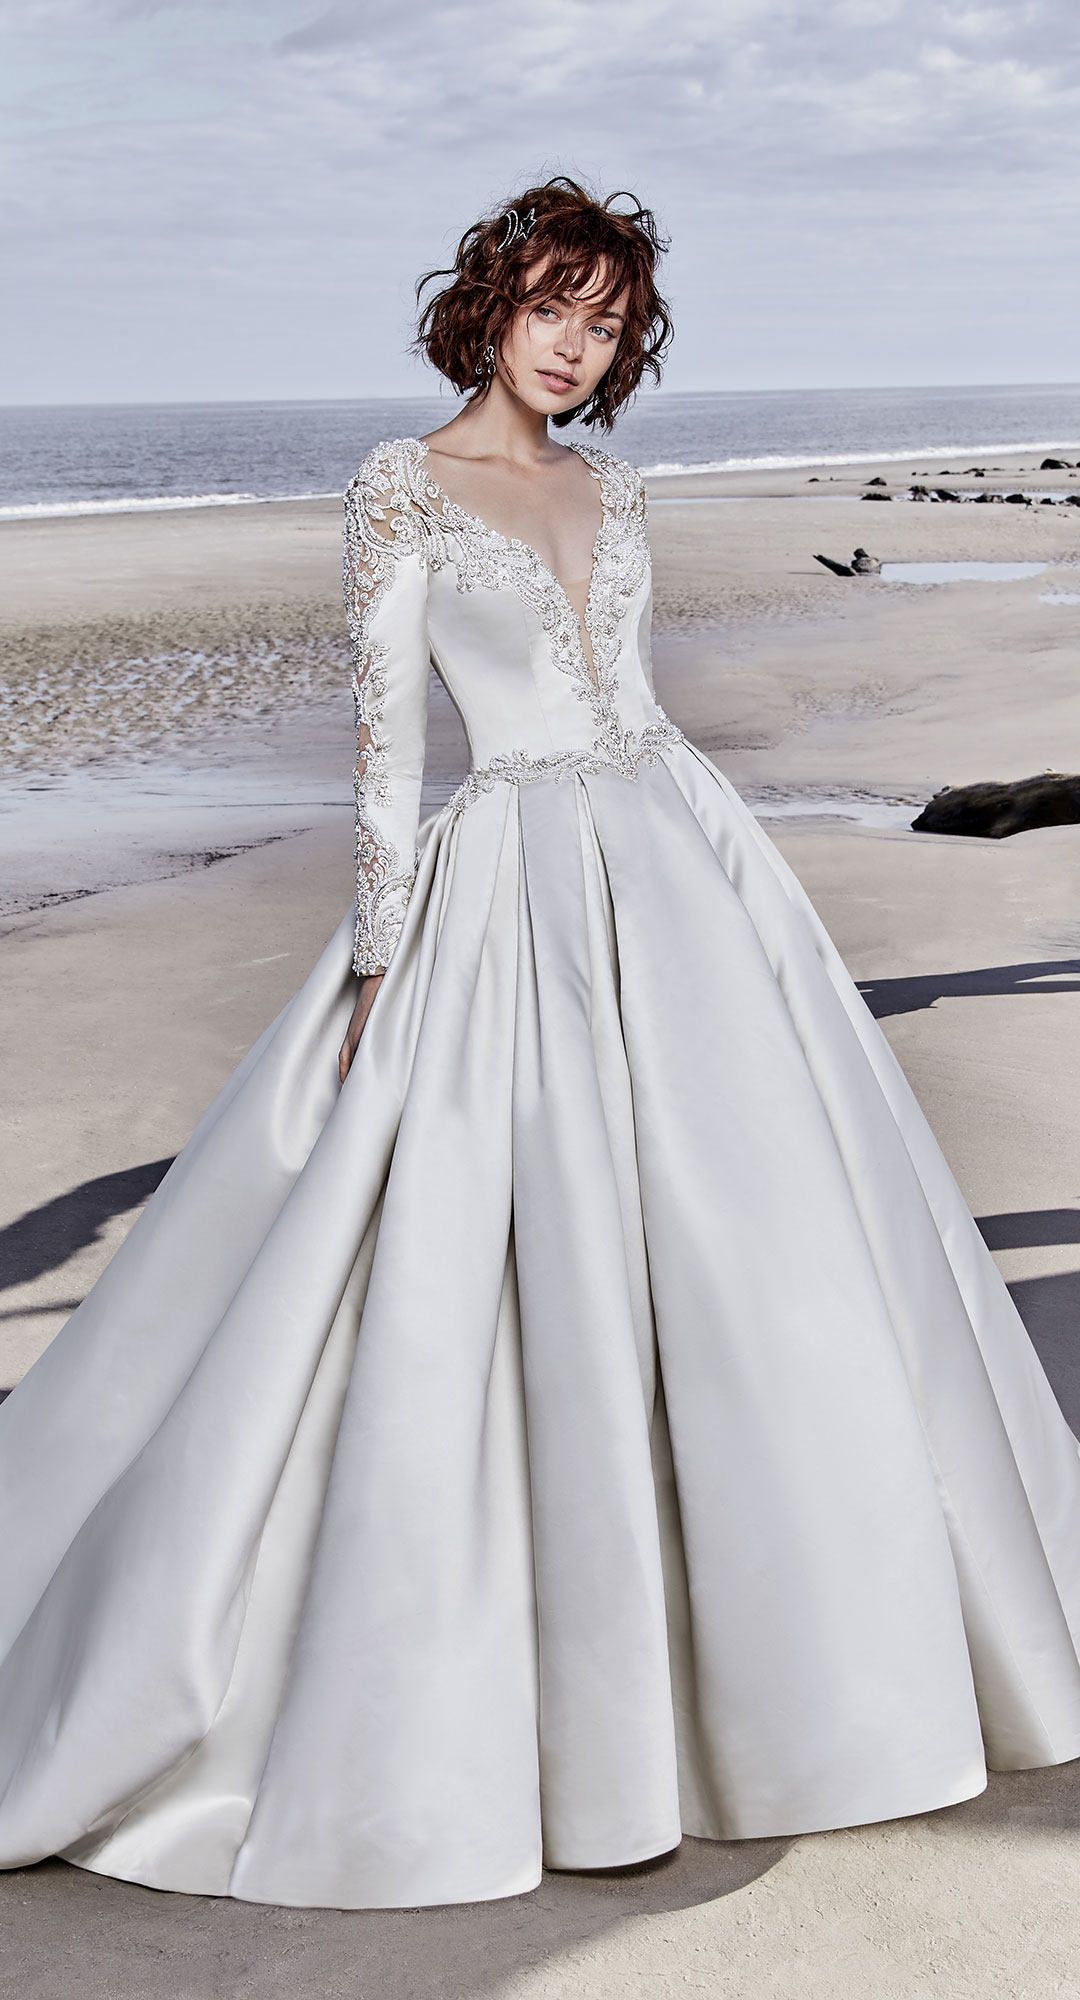 sottero midgley plunging vneck long sleeve ball gown wedding dress (brennon) mv romantic princess